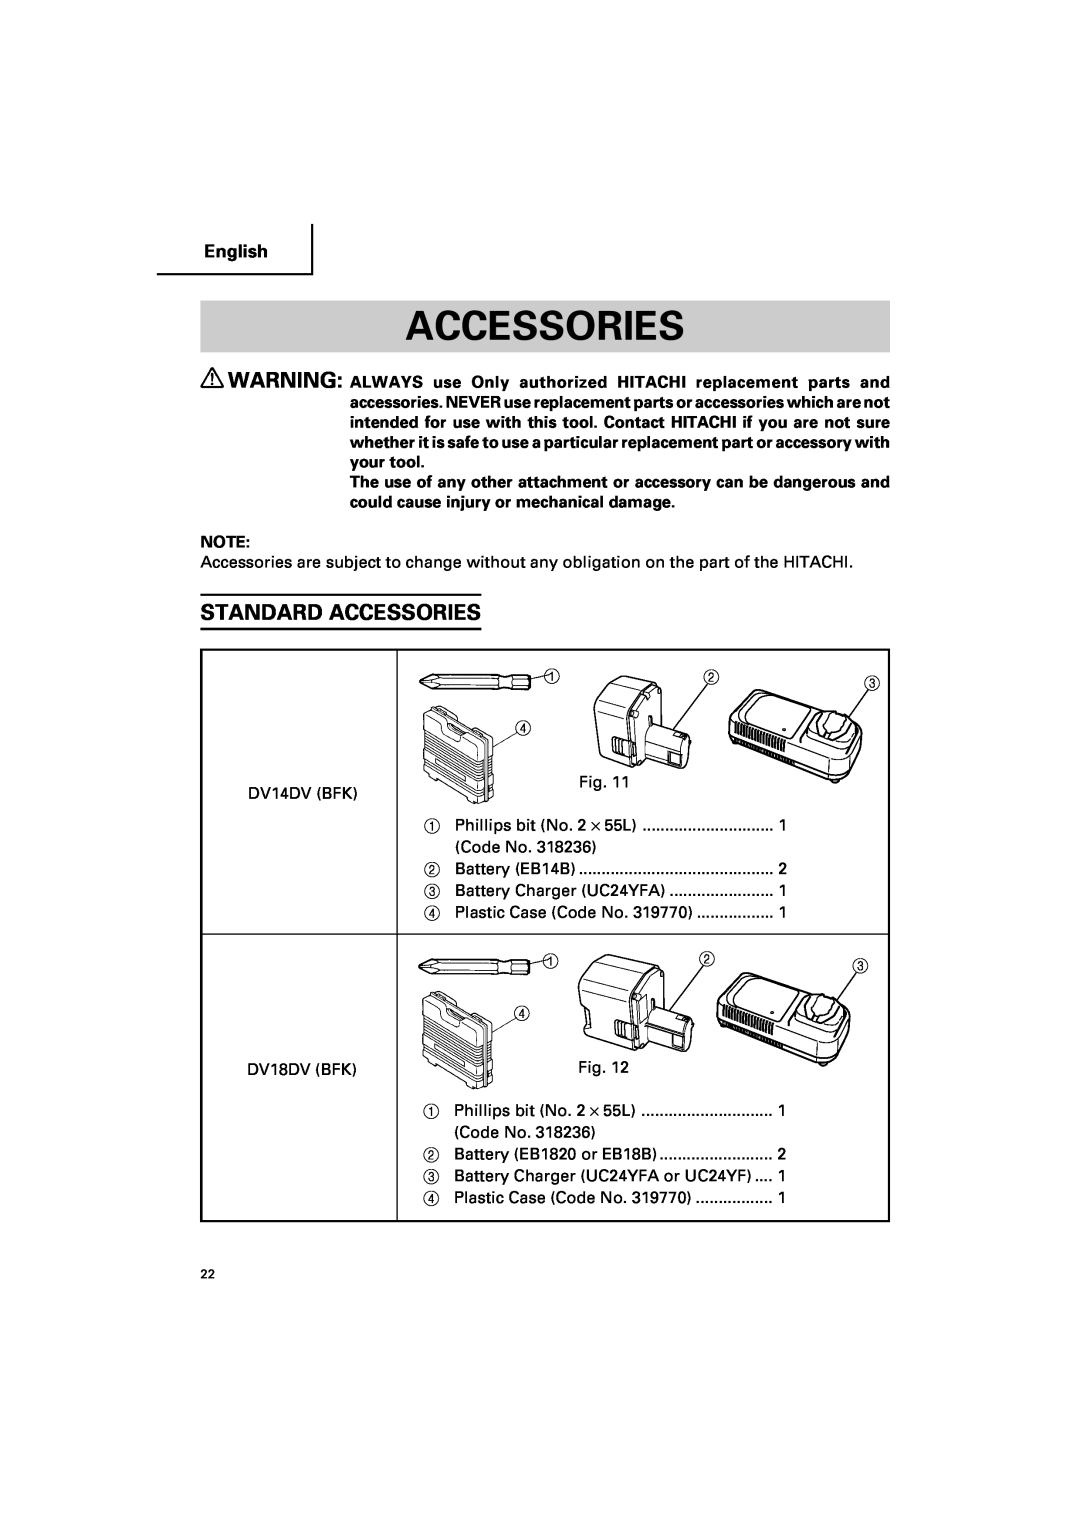 Hitachi DV 18DV, DV 14DV instruction manual Standard Accessories, English 